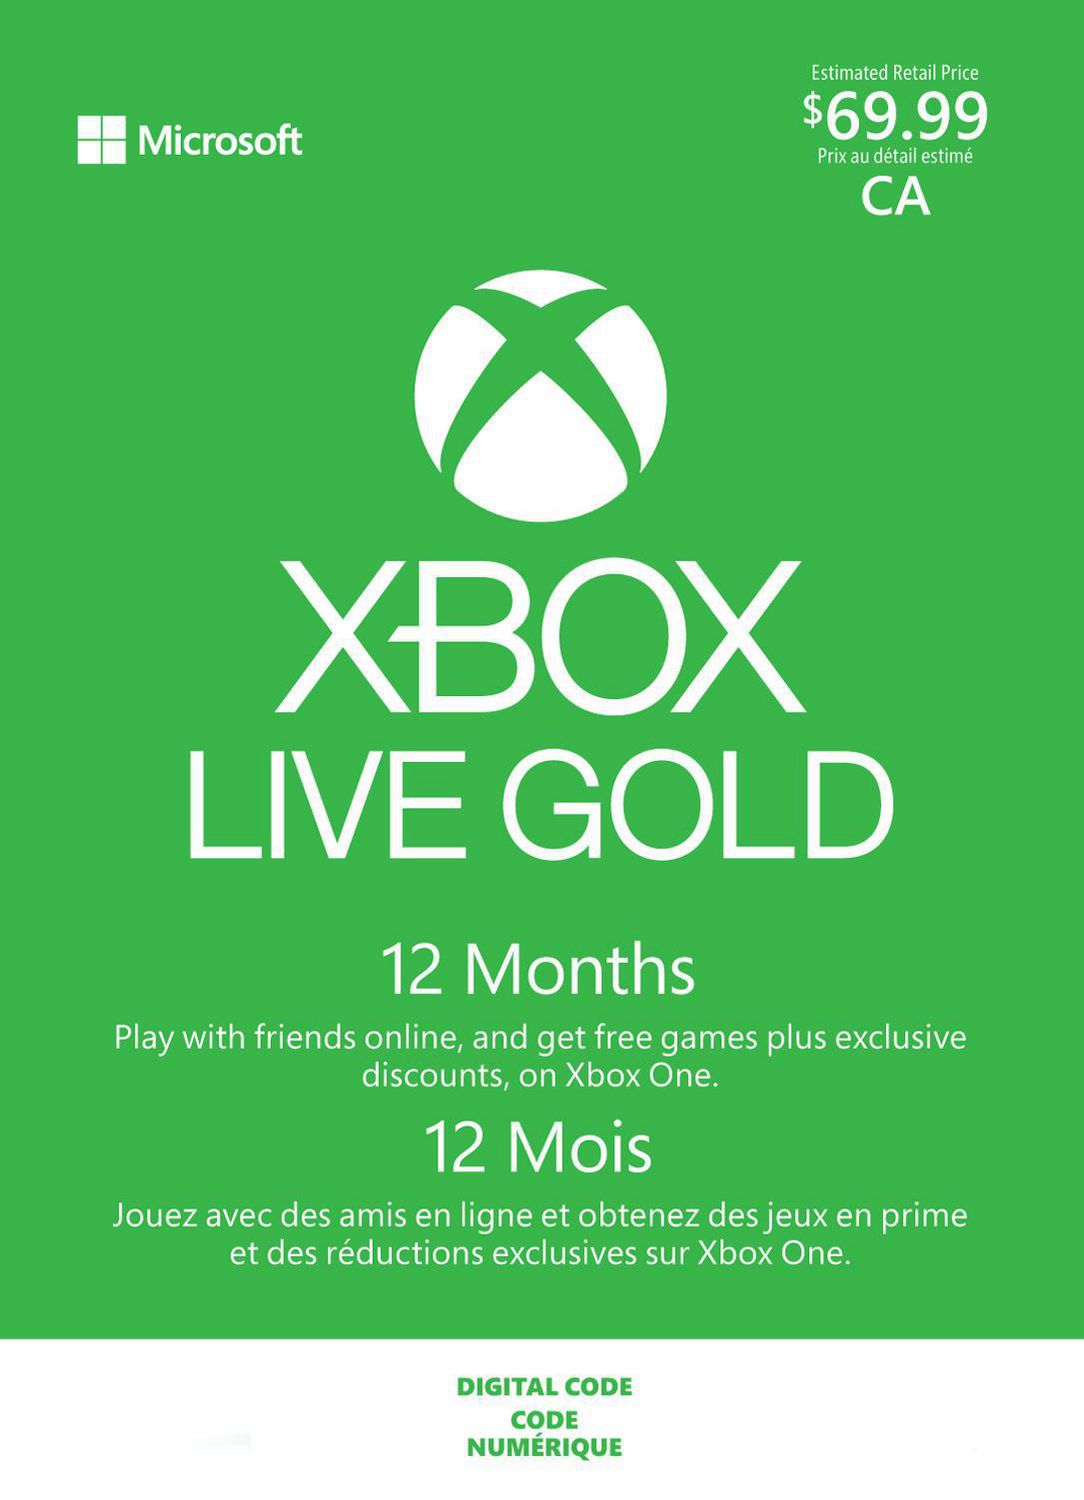 12 month live gold membership